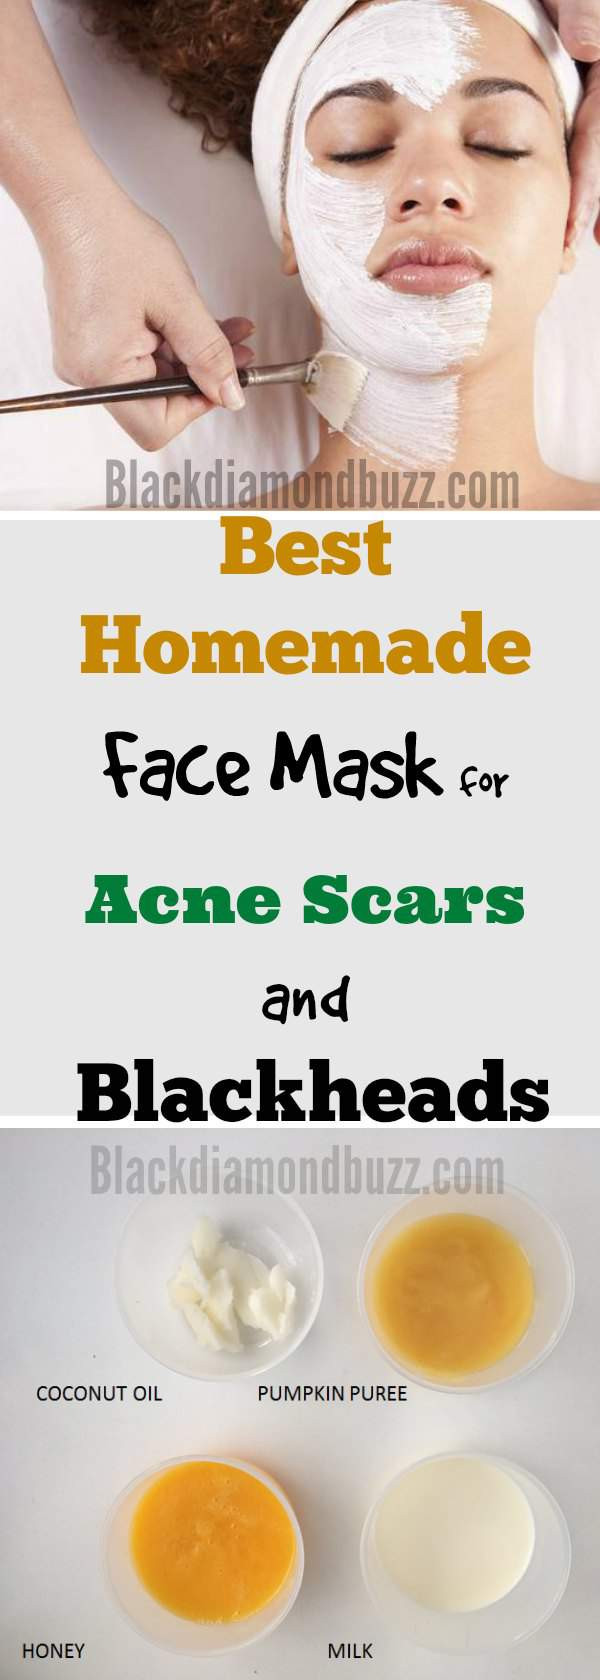 DIY Face Mask Acne
 DIY Face Mask for Acne 7 Best Homemade Face Masks